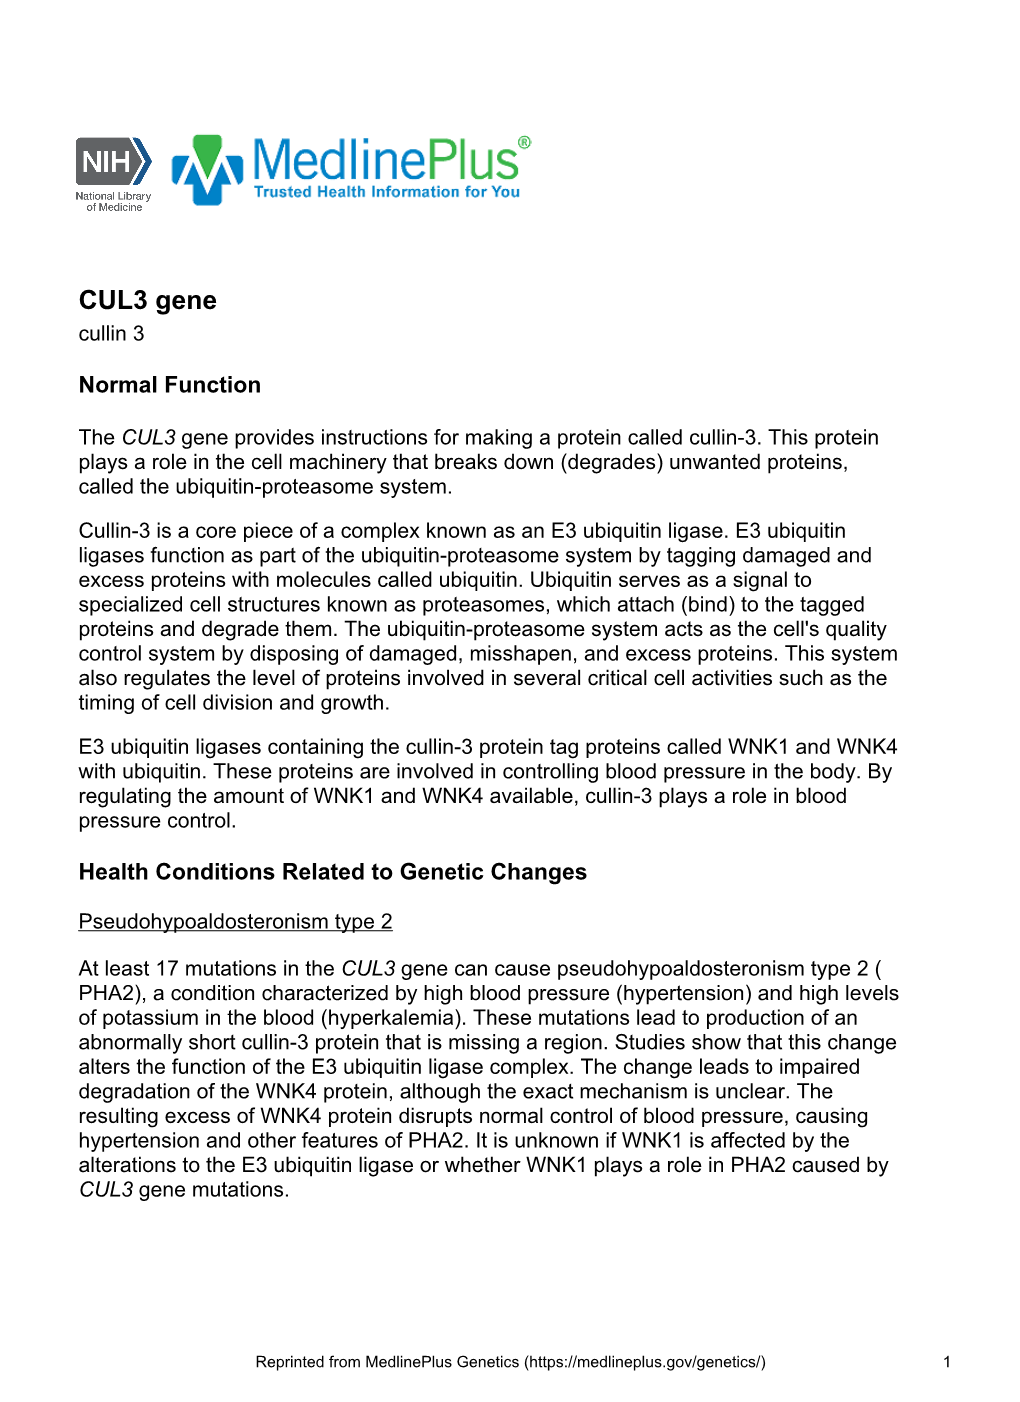 CUL3 Gene Cullin 3